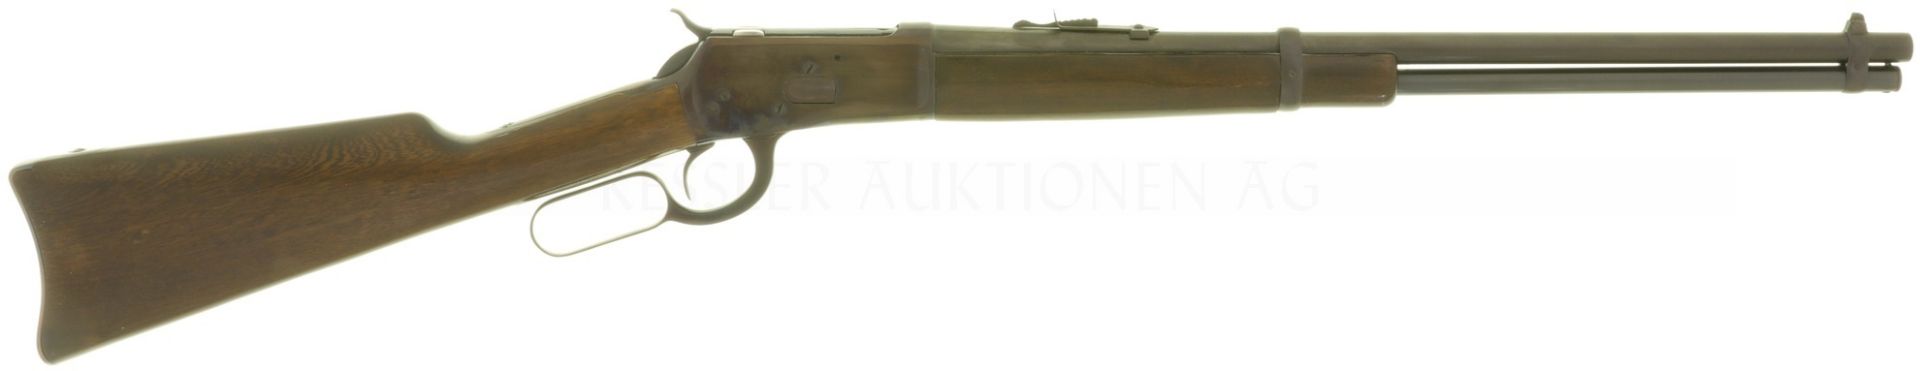 Unterhebelrepetierbüchse, Rossi Puma, Replica der Winchester 1892, Kal. .357Mag